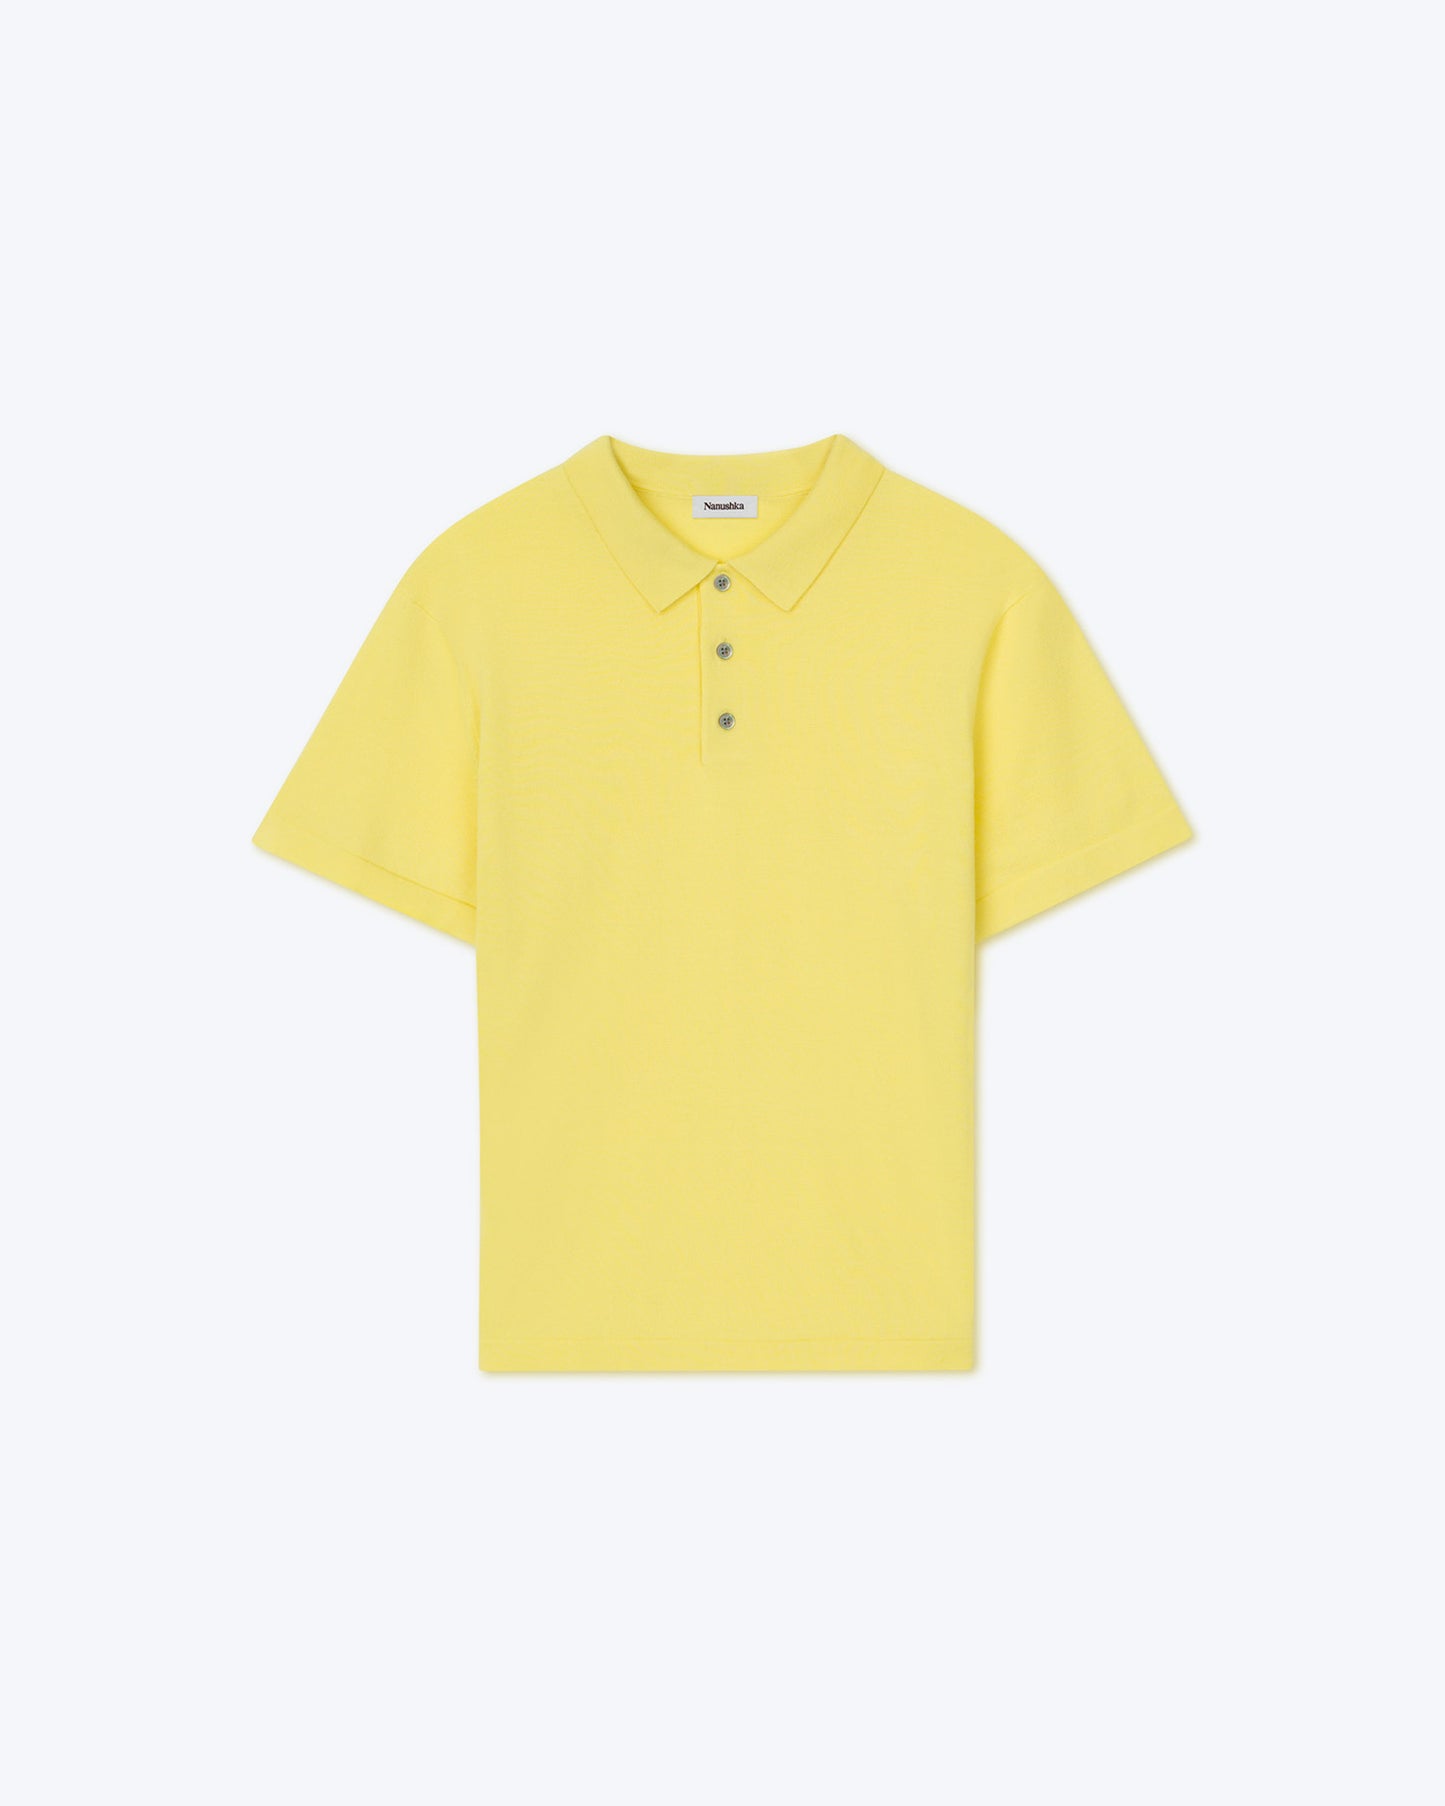 Zamir - Archive Merino Wool Polo Shirt - Lime Superfine Merino